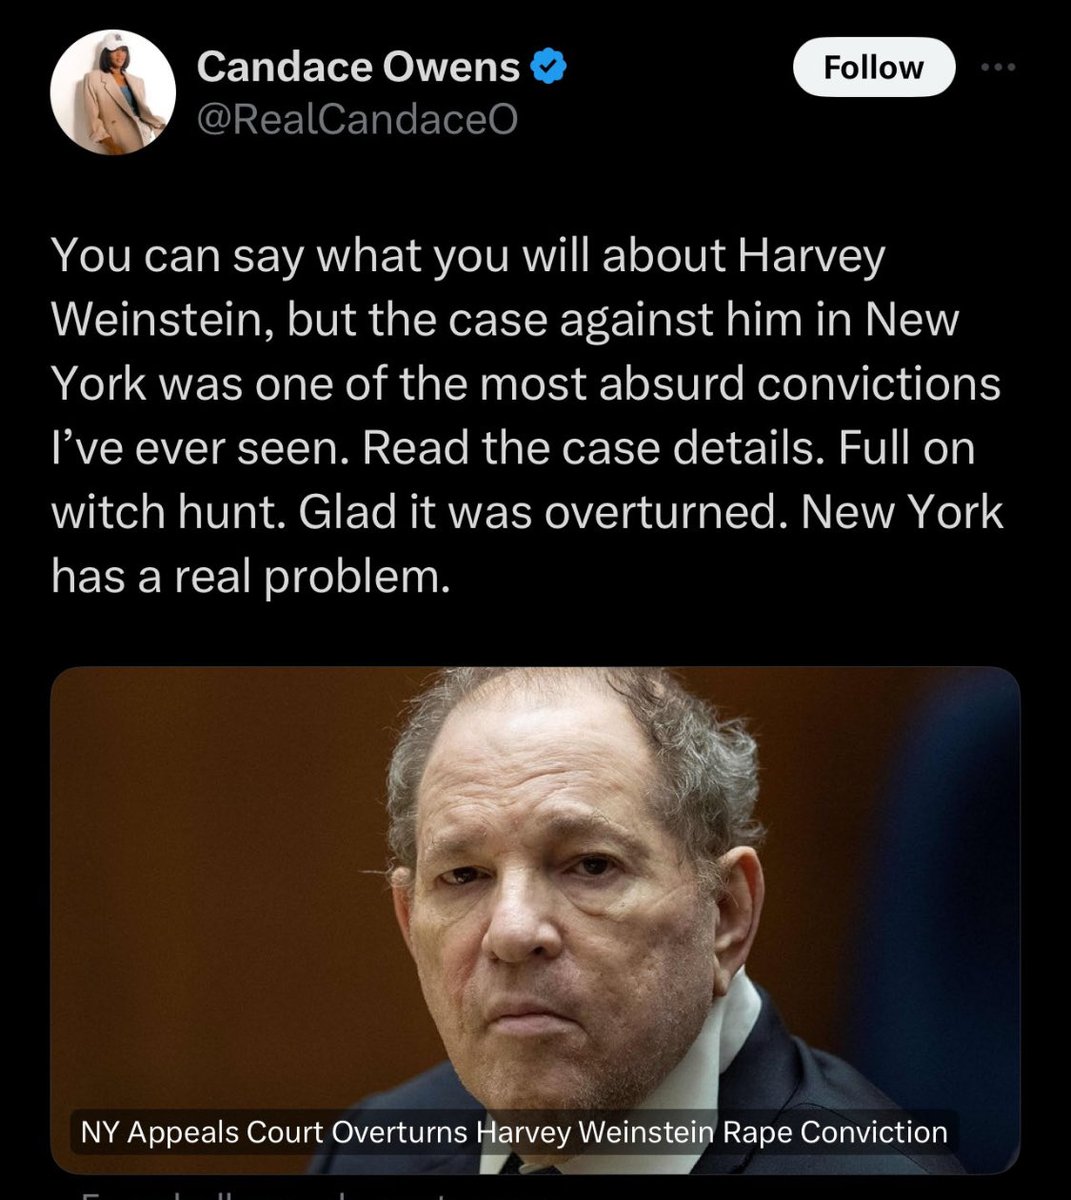 Now she’s defending Weinstein?